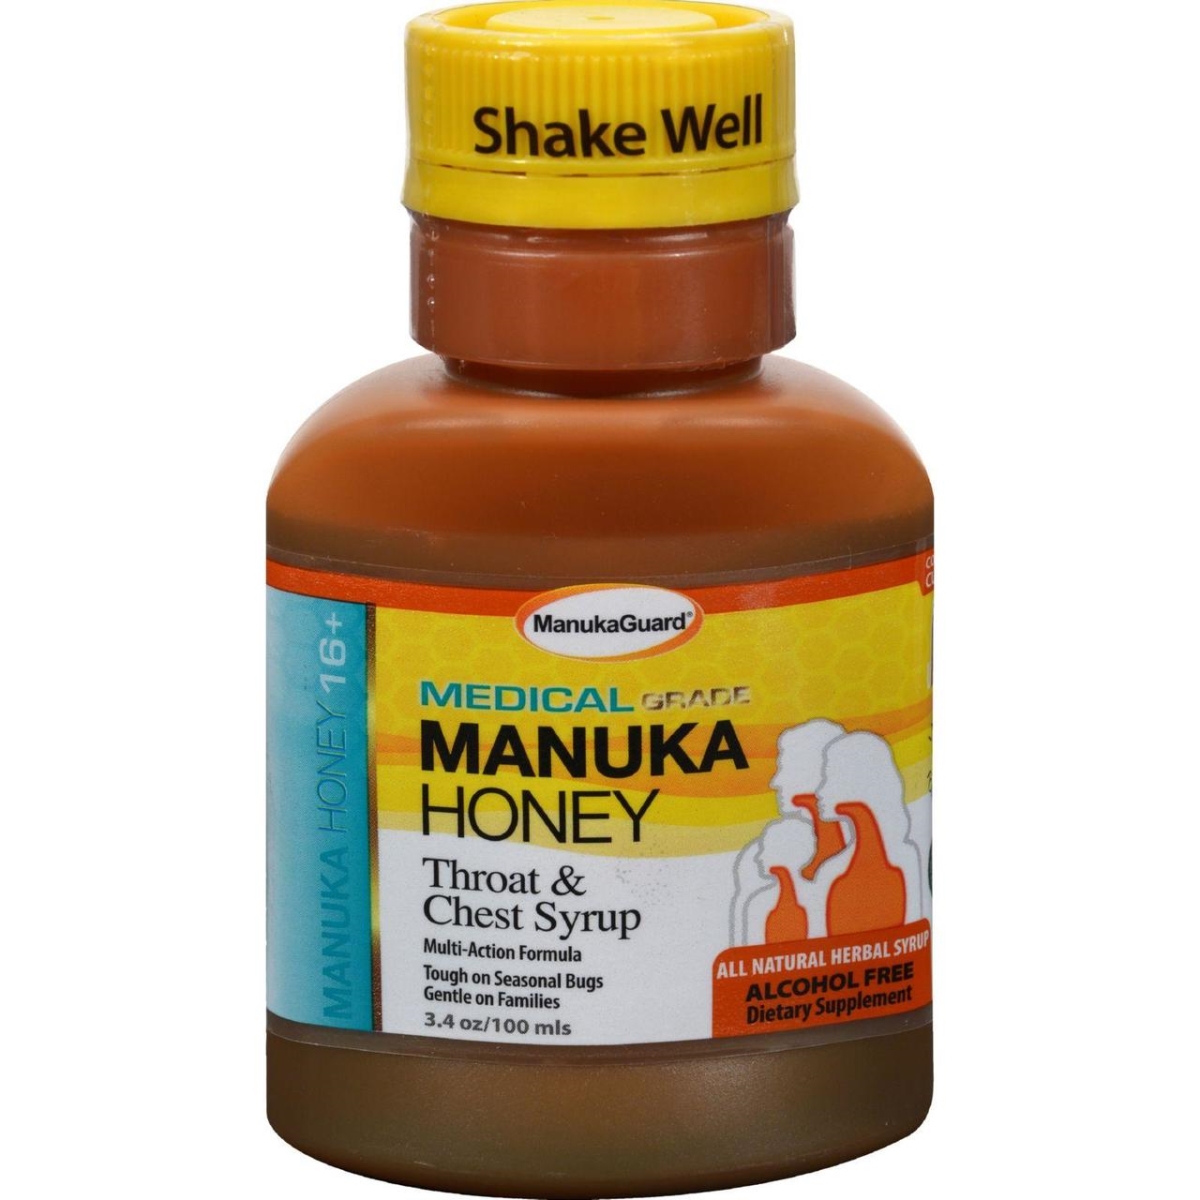 Manukaguard Hg1233964 3.4 Fl Oz Throat & Chest Syrup, 100 Ml